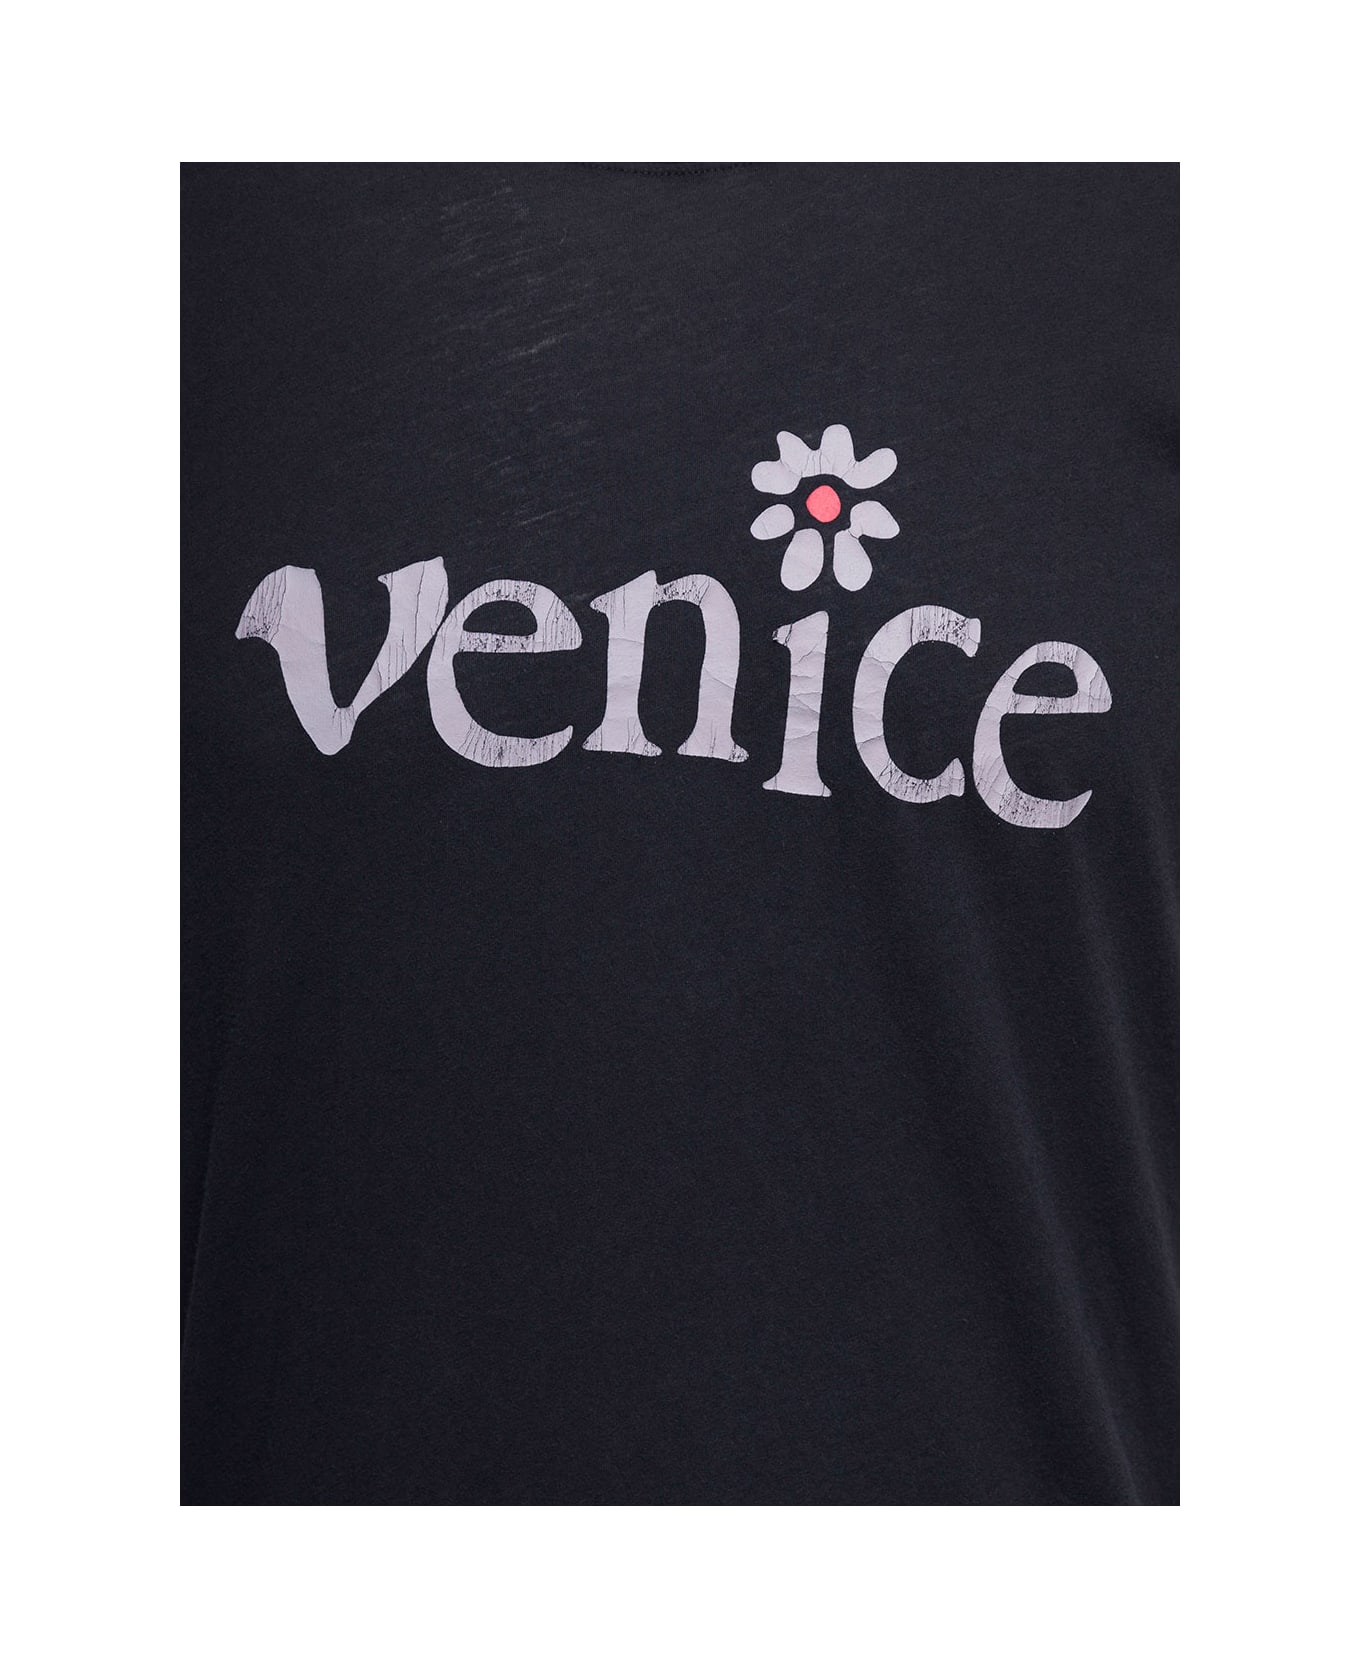 ERL Black Crewneck T-shirt With Venice Print In Cotton - Black